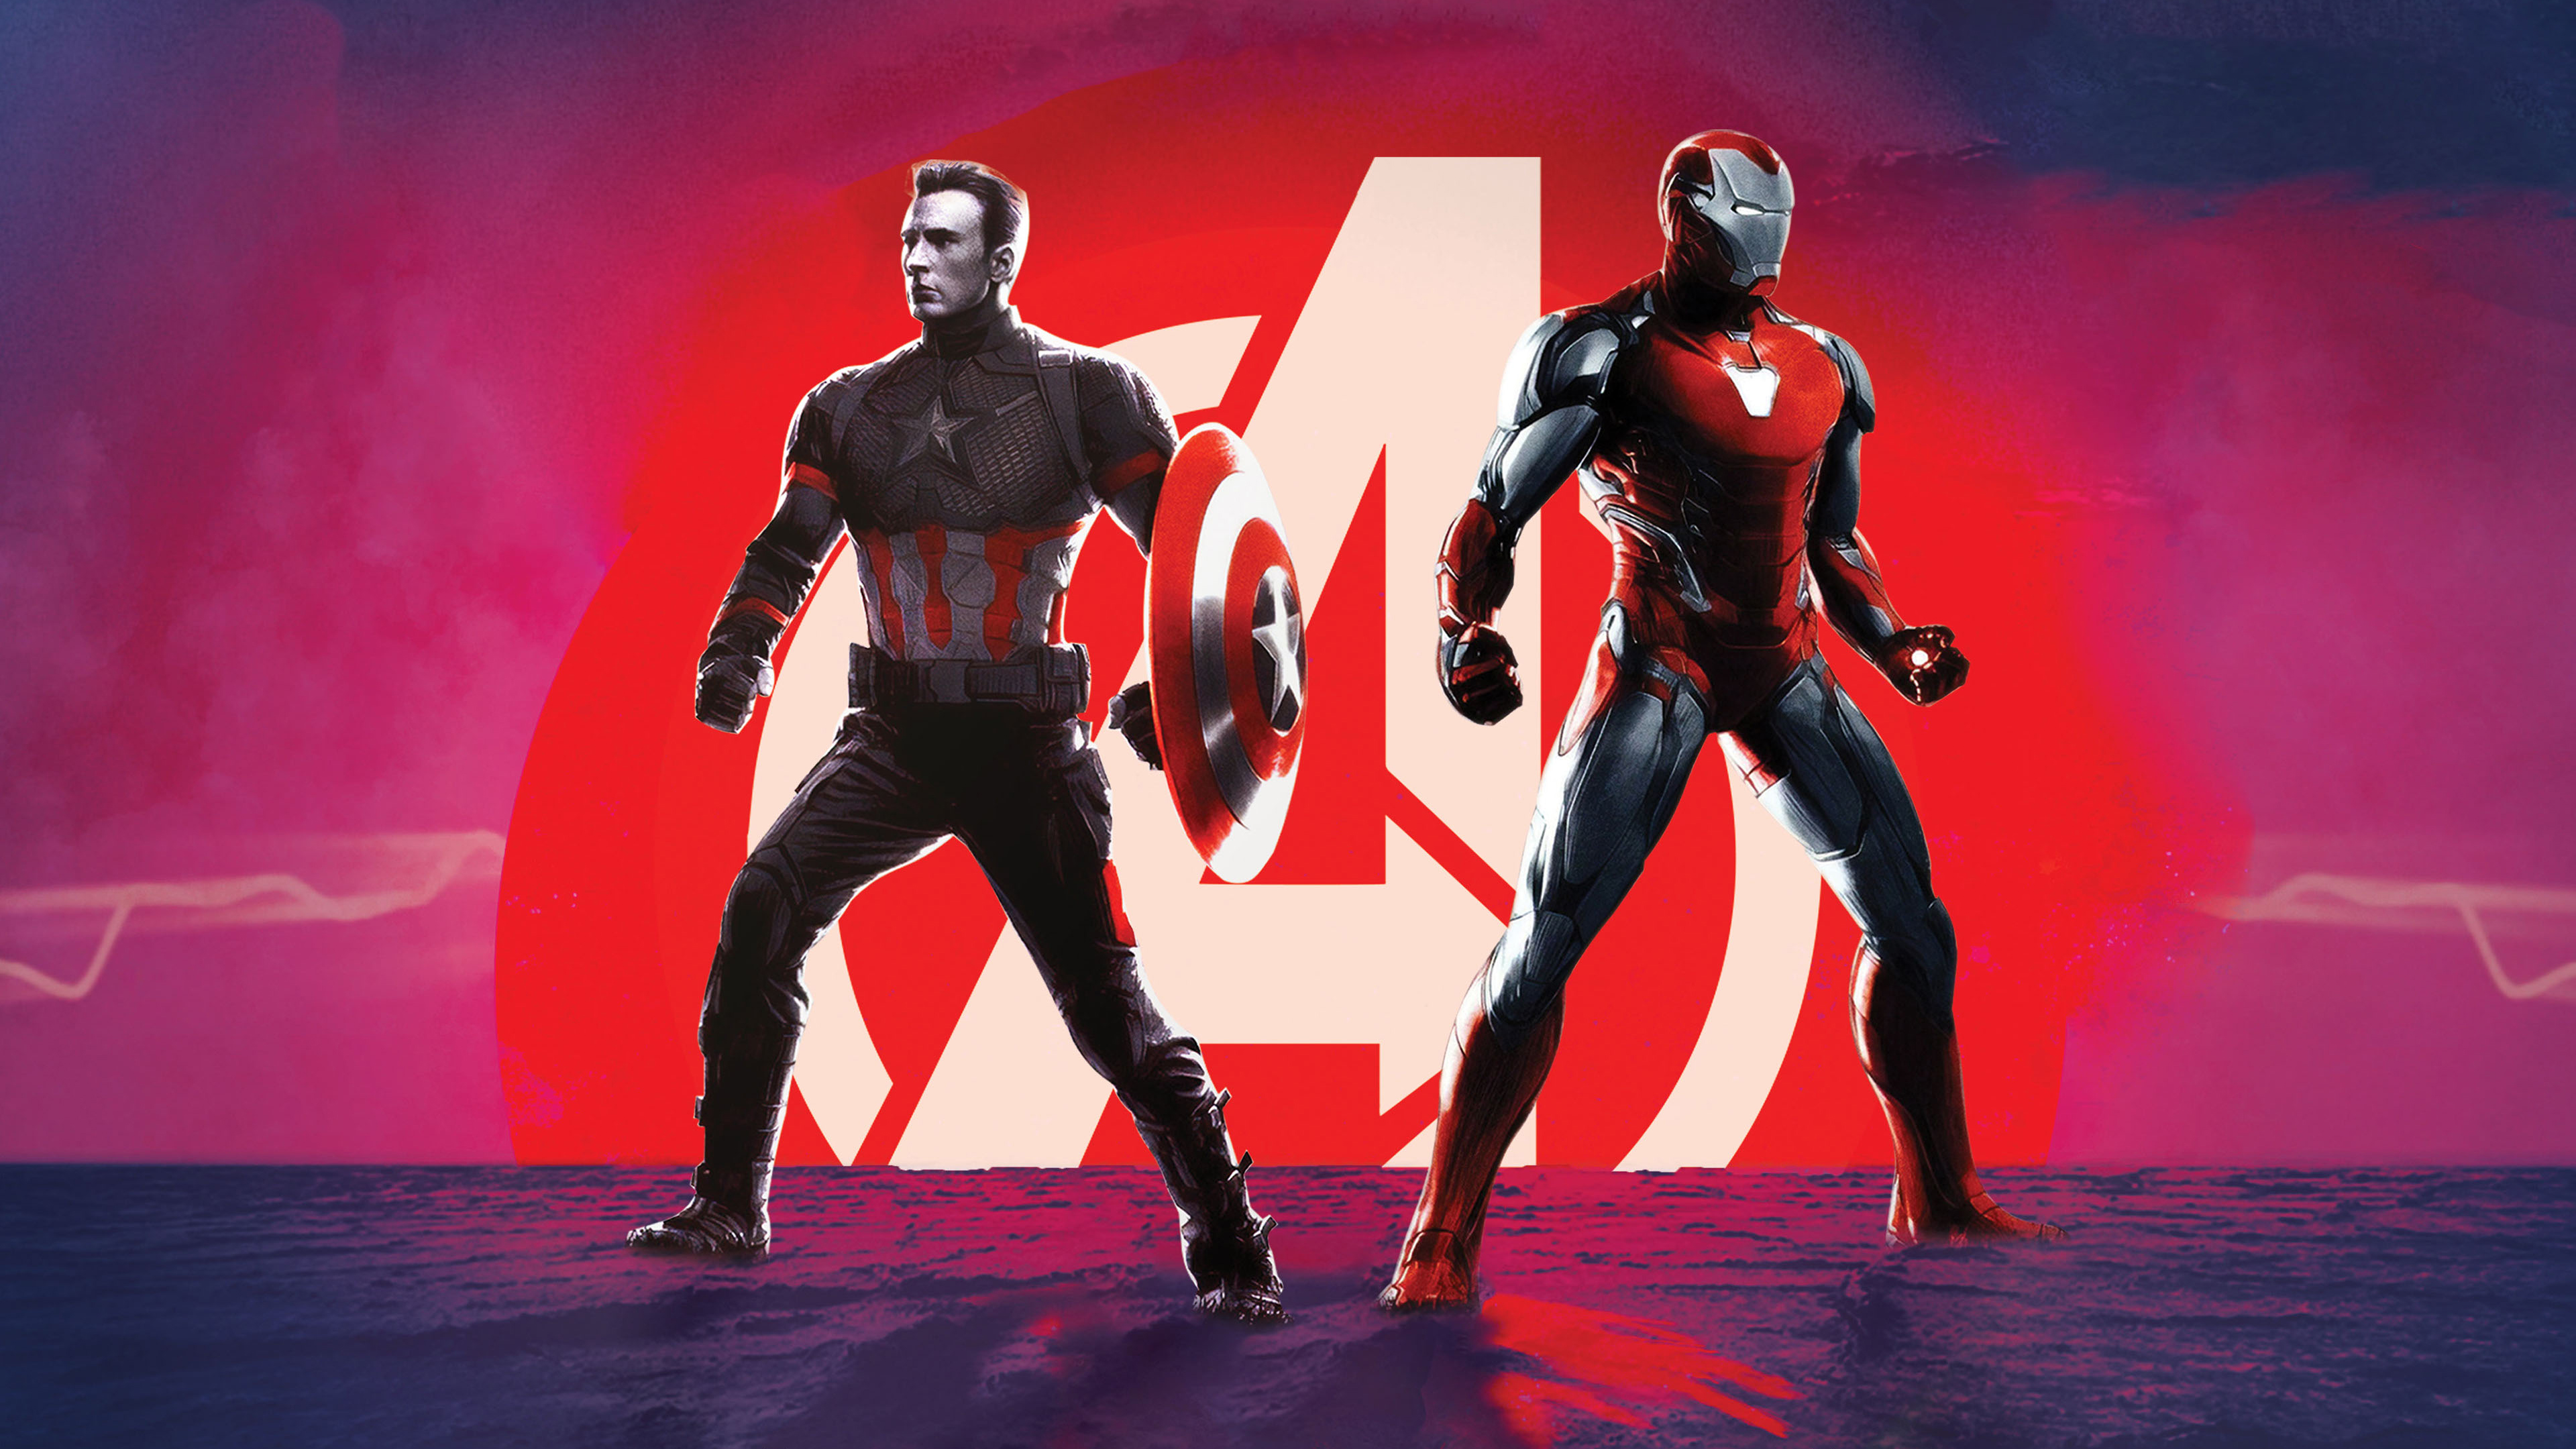 Captain America Iron Man in Avengers Endgame 4K Wallpapers | Wallpapers HD